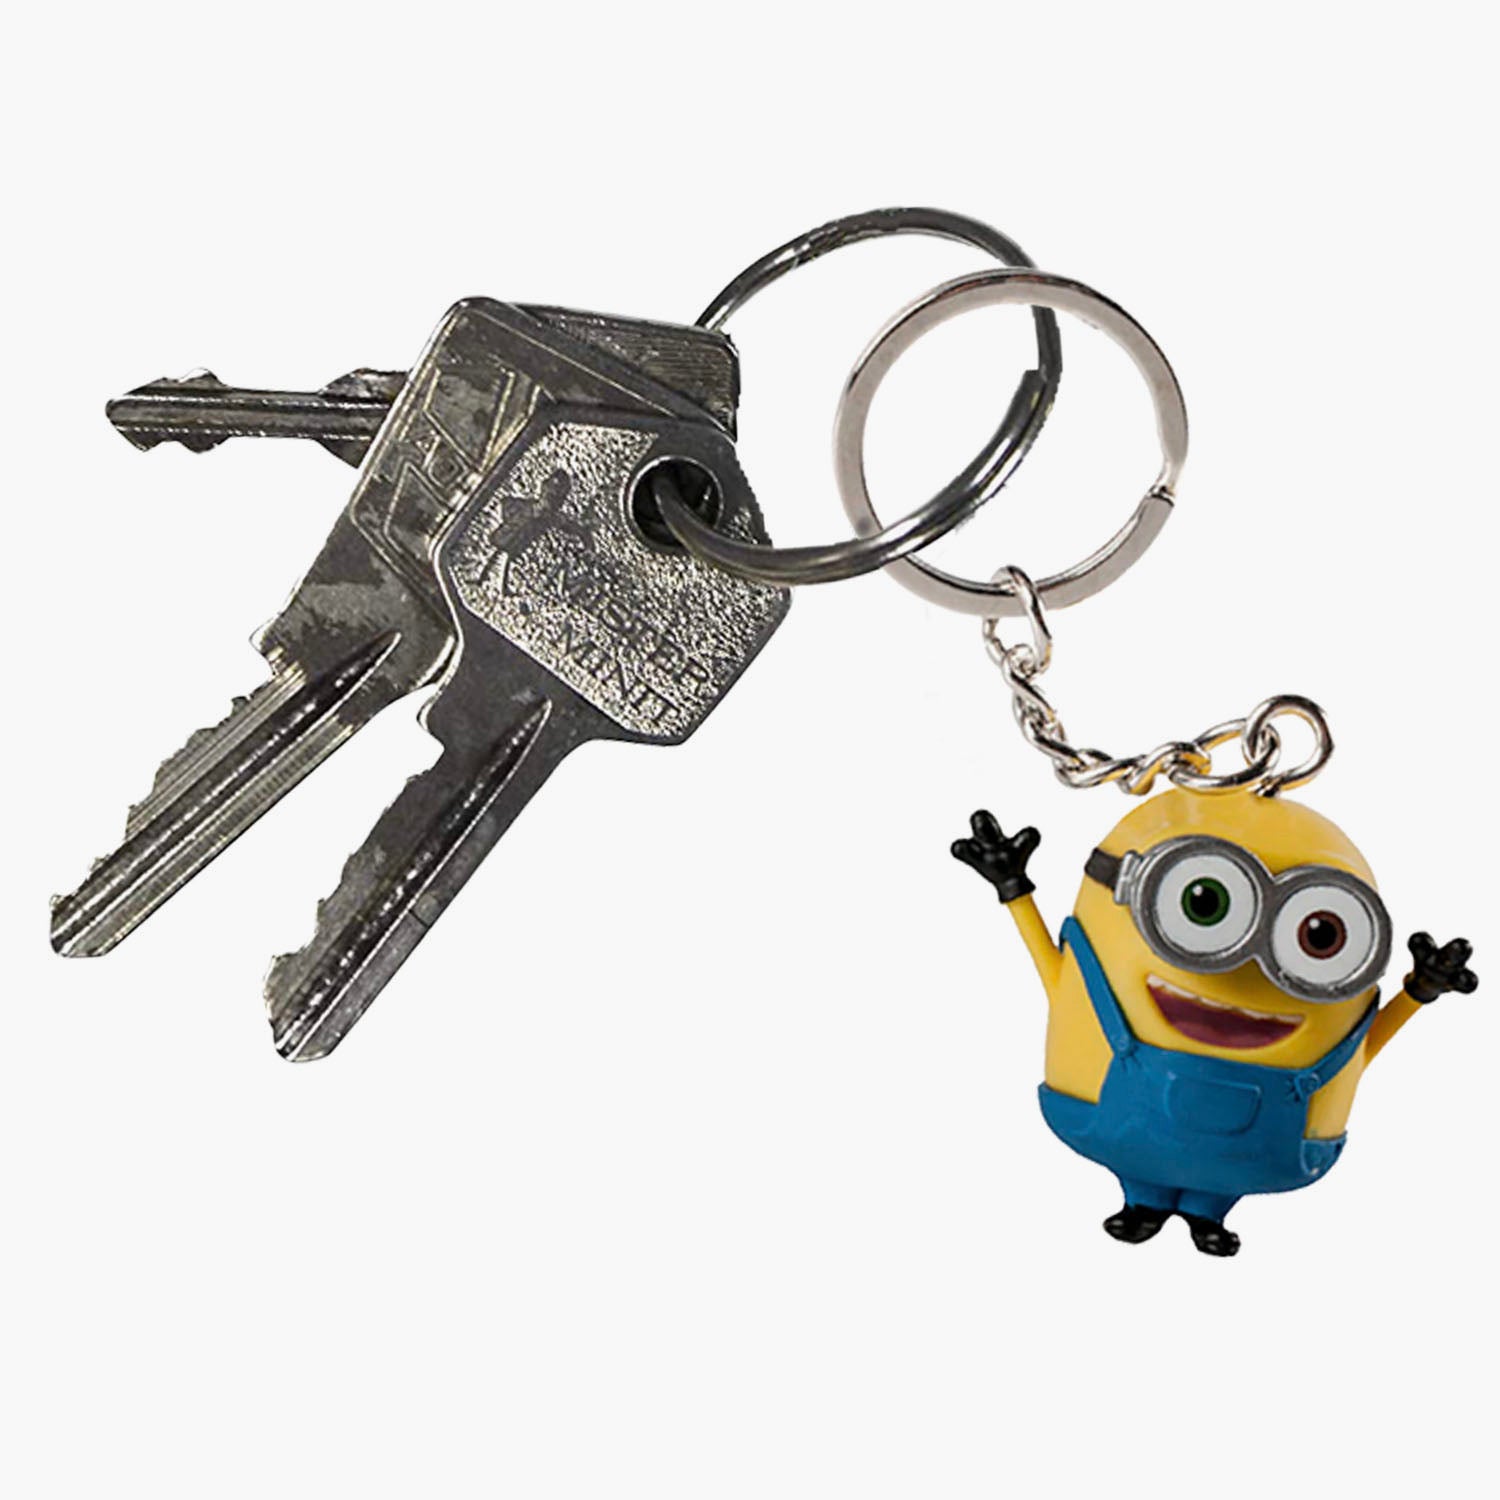 Minions BOB Keychain